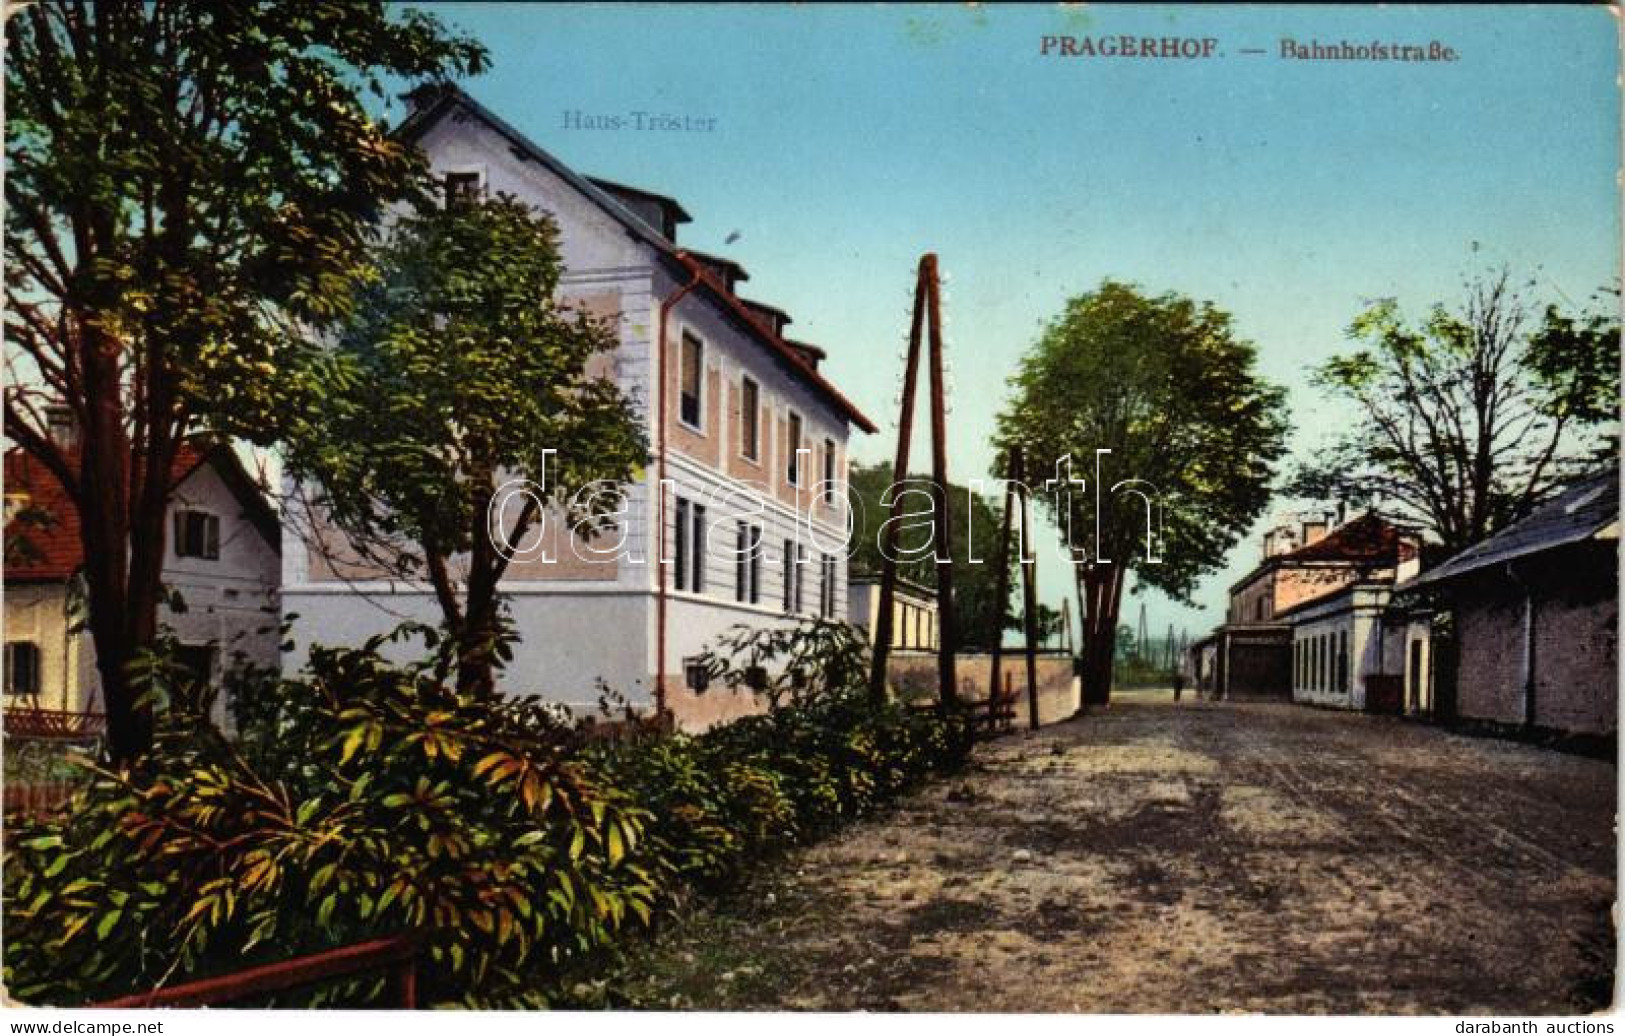 T2 1914 Pragersko, Pragerhof; Bahnhofstrasse / Railway Street - Non Classés